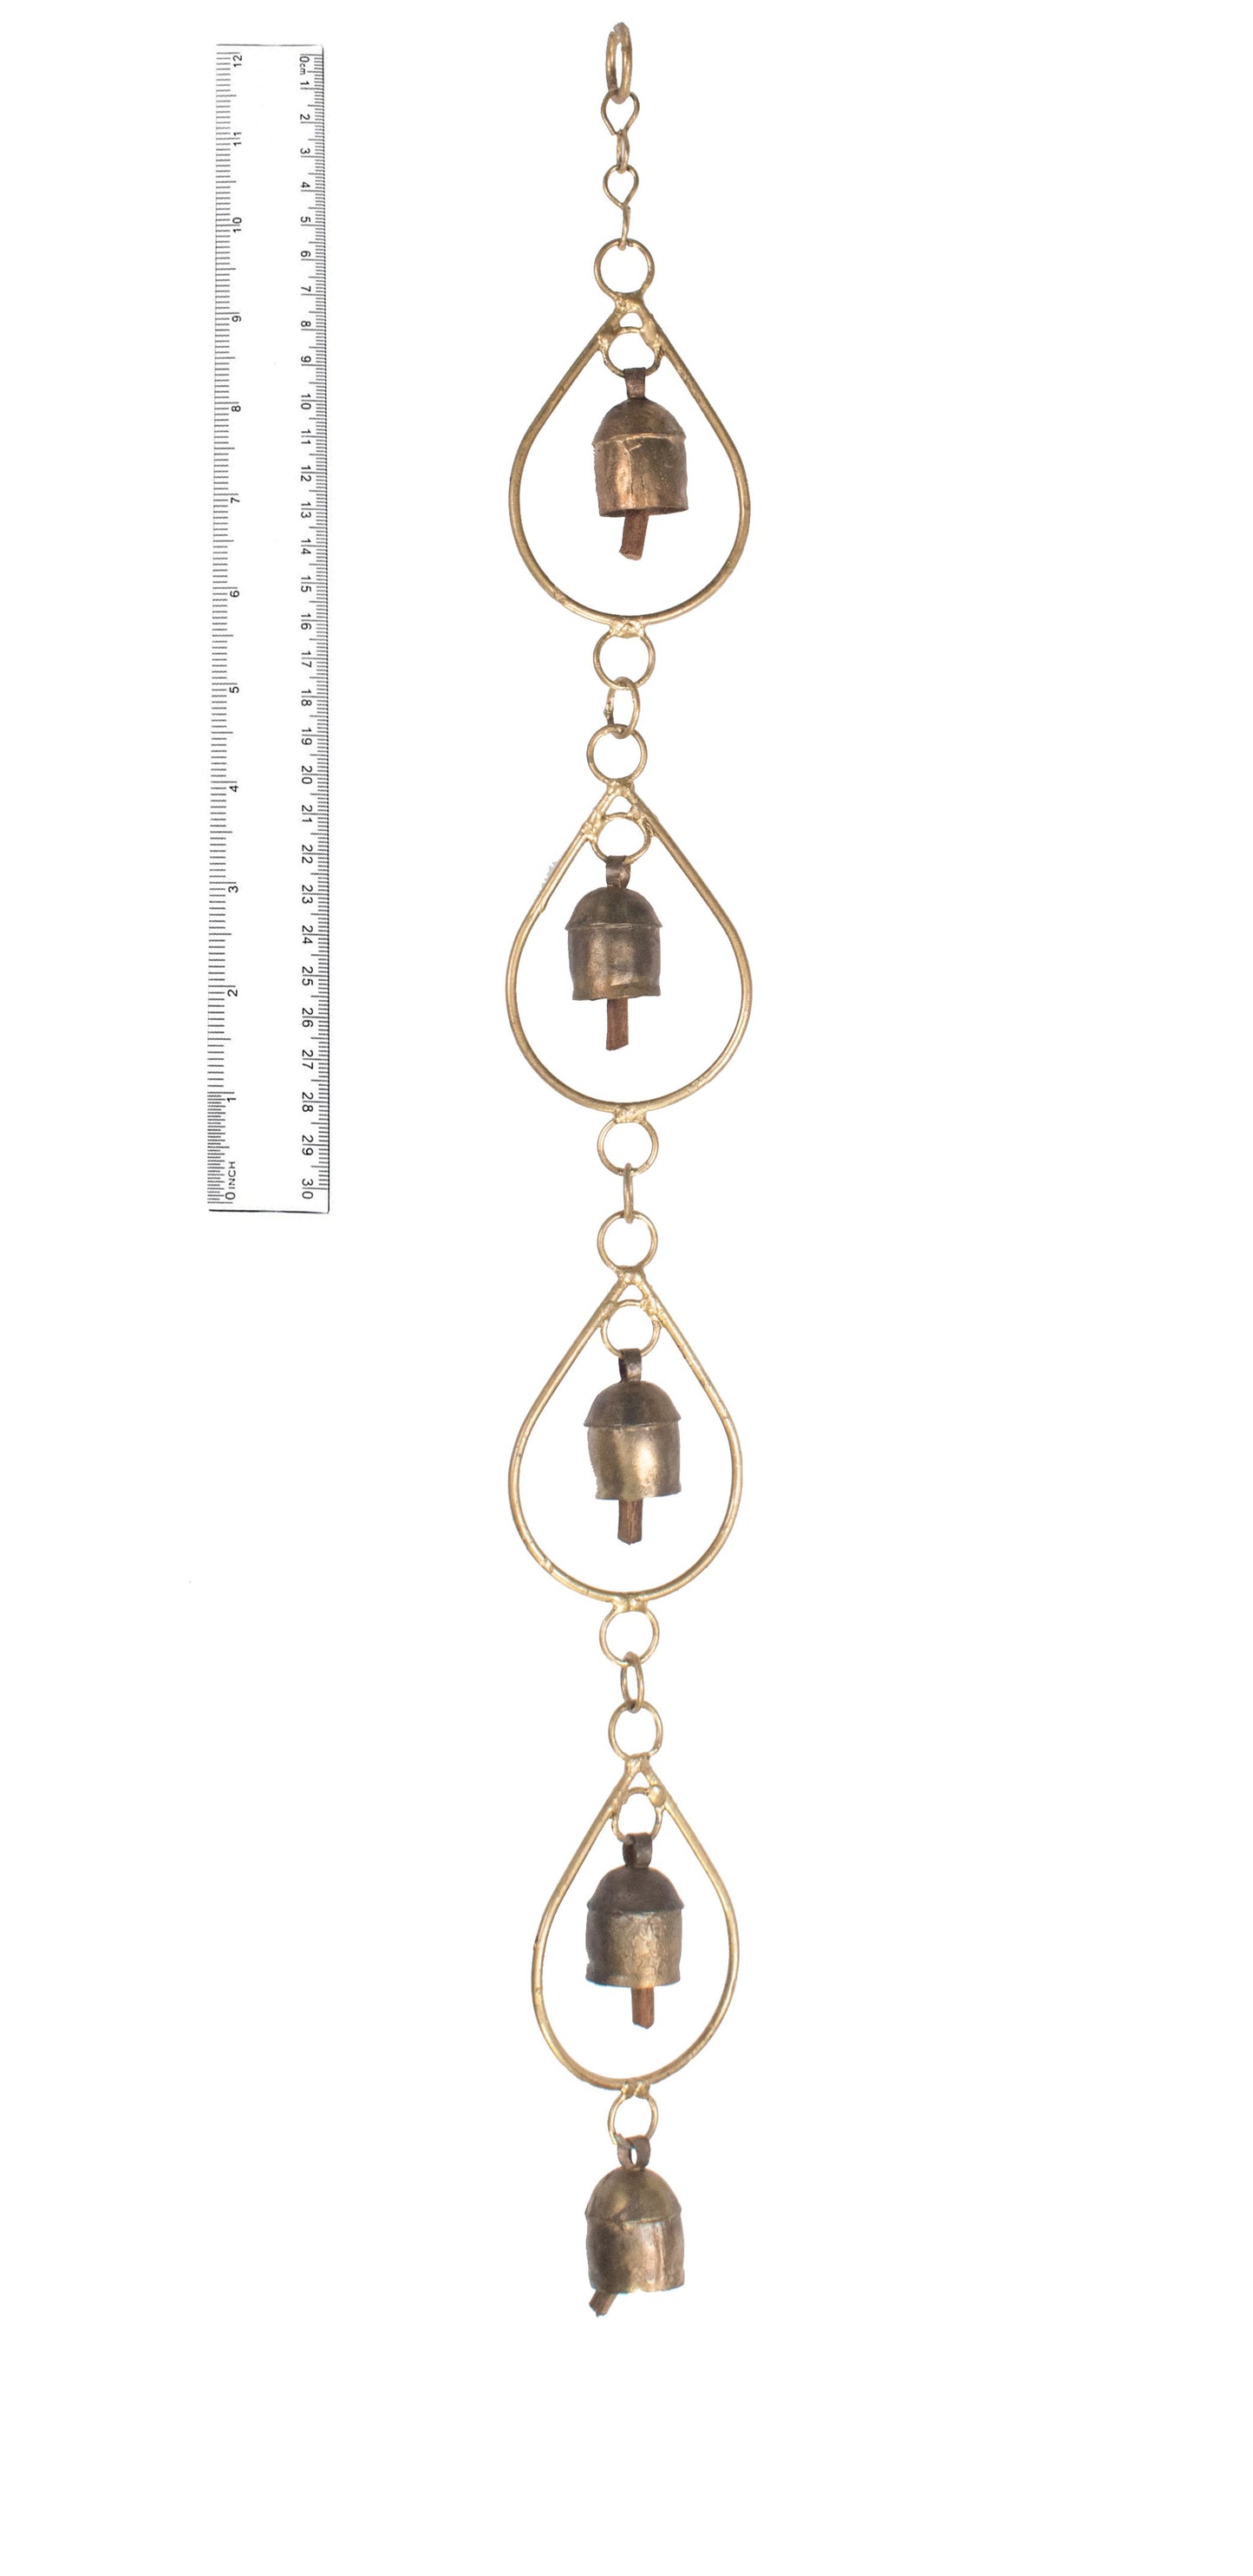 Hand Made Metal Bells Wrought Iron Copper-Zinc Coated Home Décor Chimes Cow Bell   - Drop  Series - 5 Bells  -  SKU: 0065